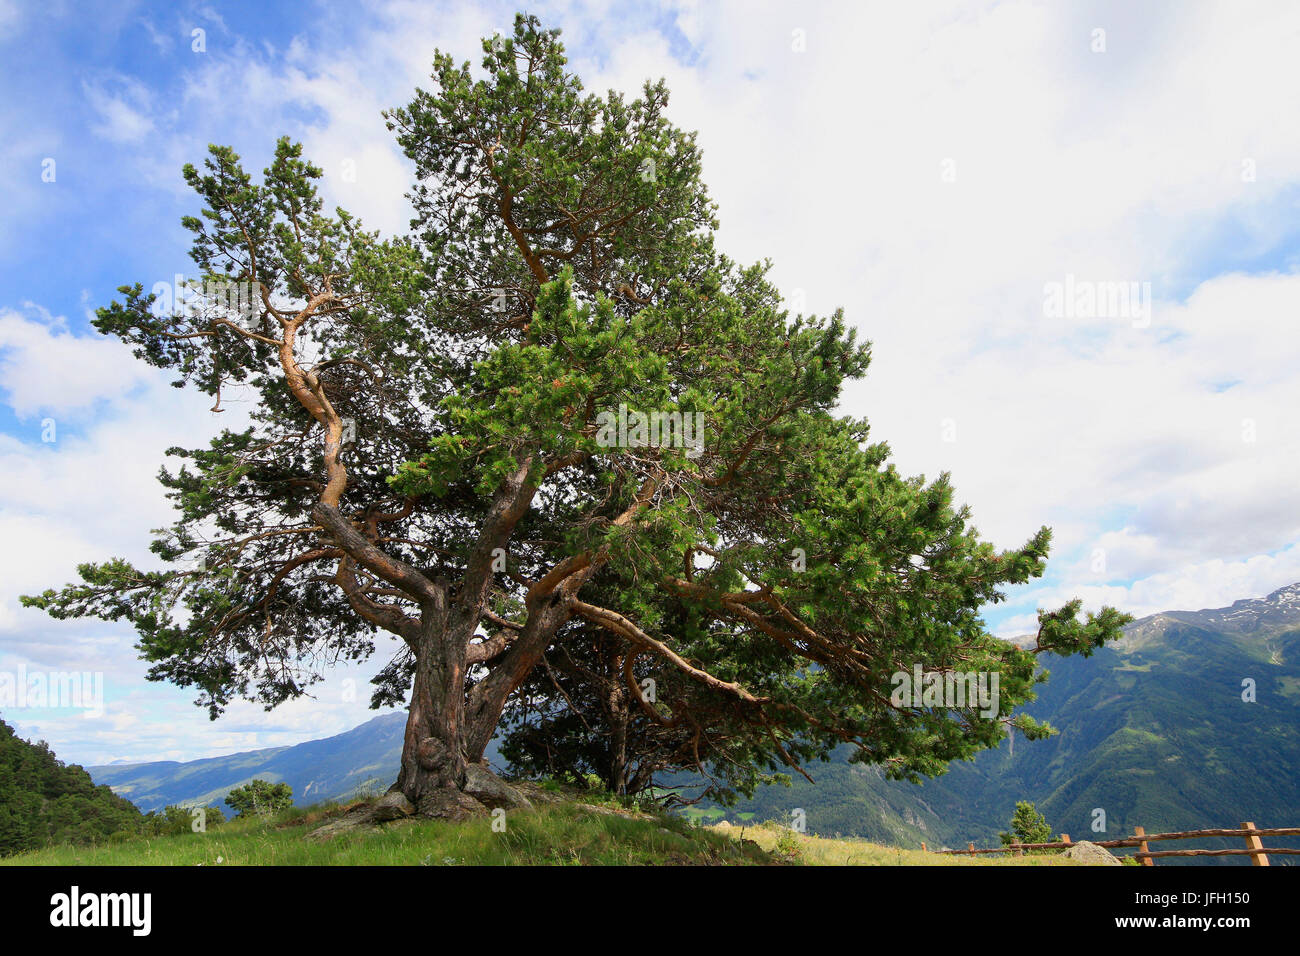 Swiss pine, Pinus cembra, on hill Stock Photo